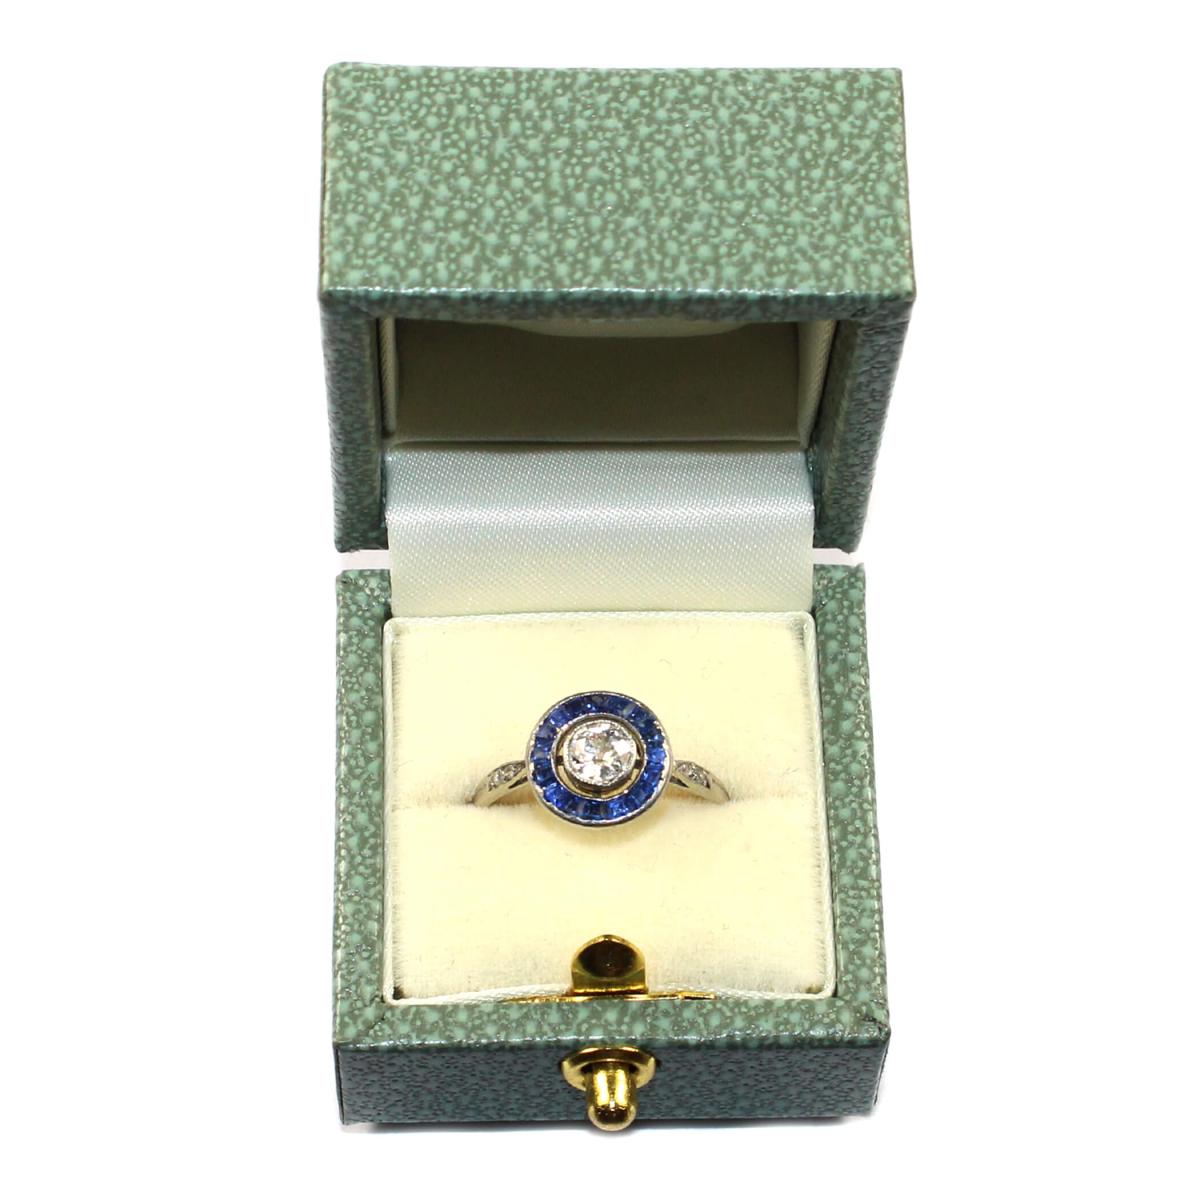 Art Deco Sapphire and Diamond Target Ring circa 1930